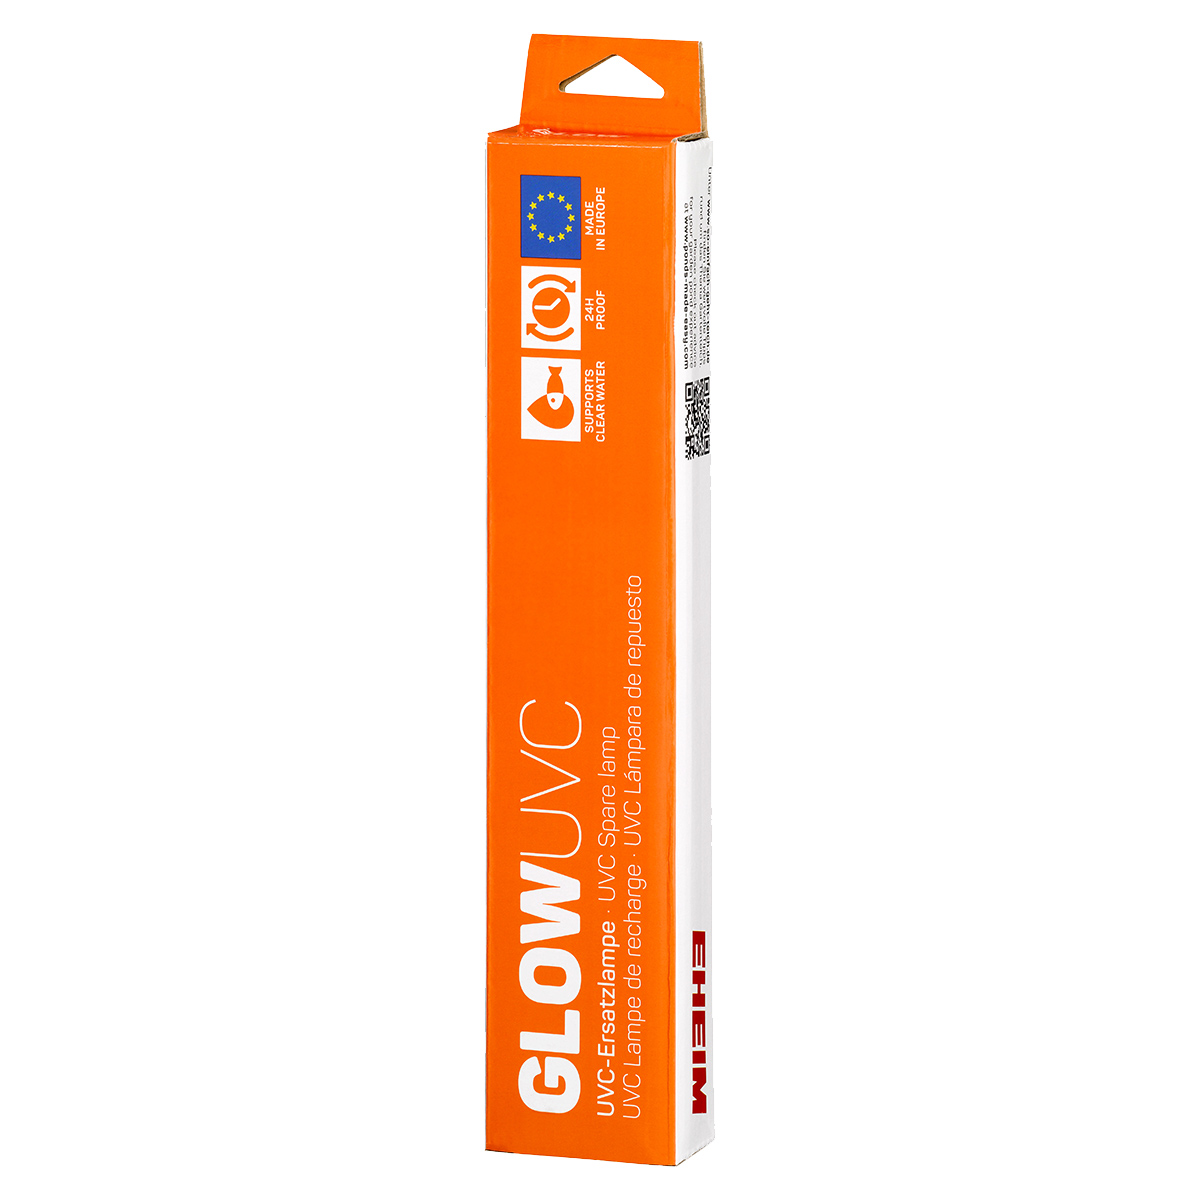 EHEIM GLOWUVC náhradní žárovka pro CLEARUVC